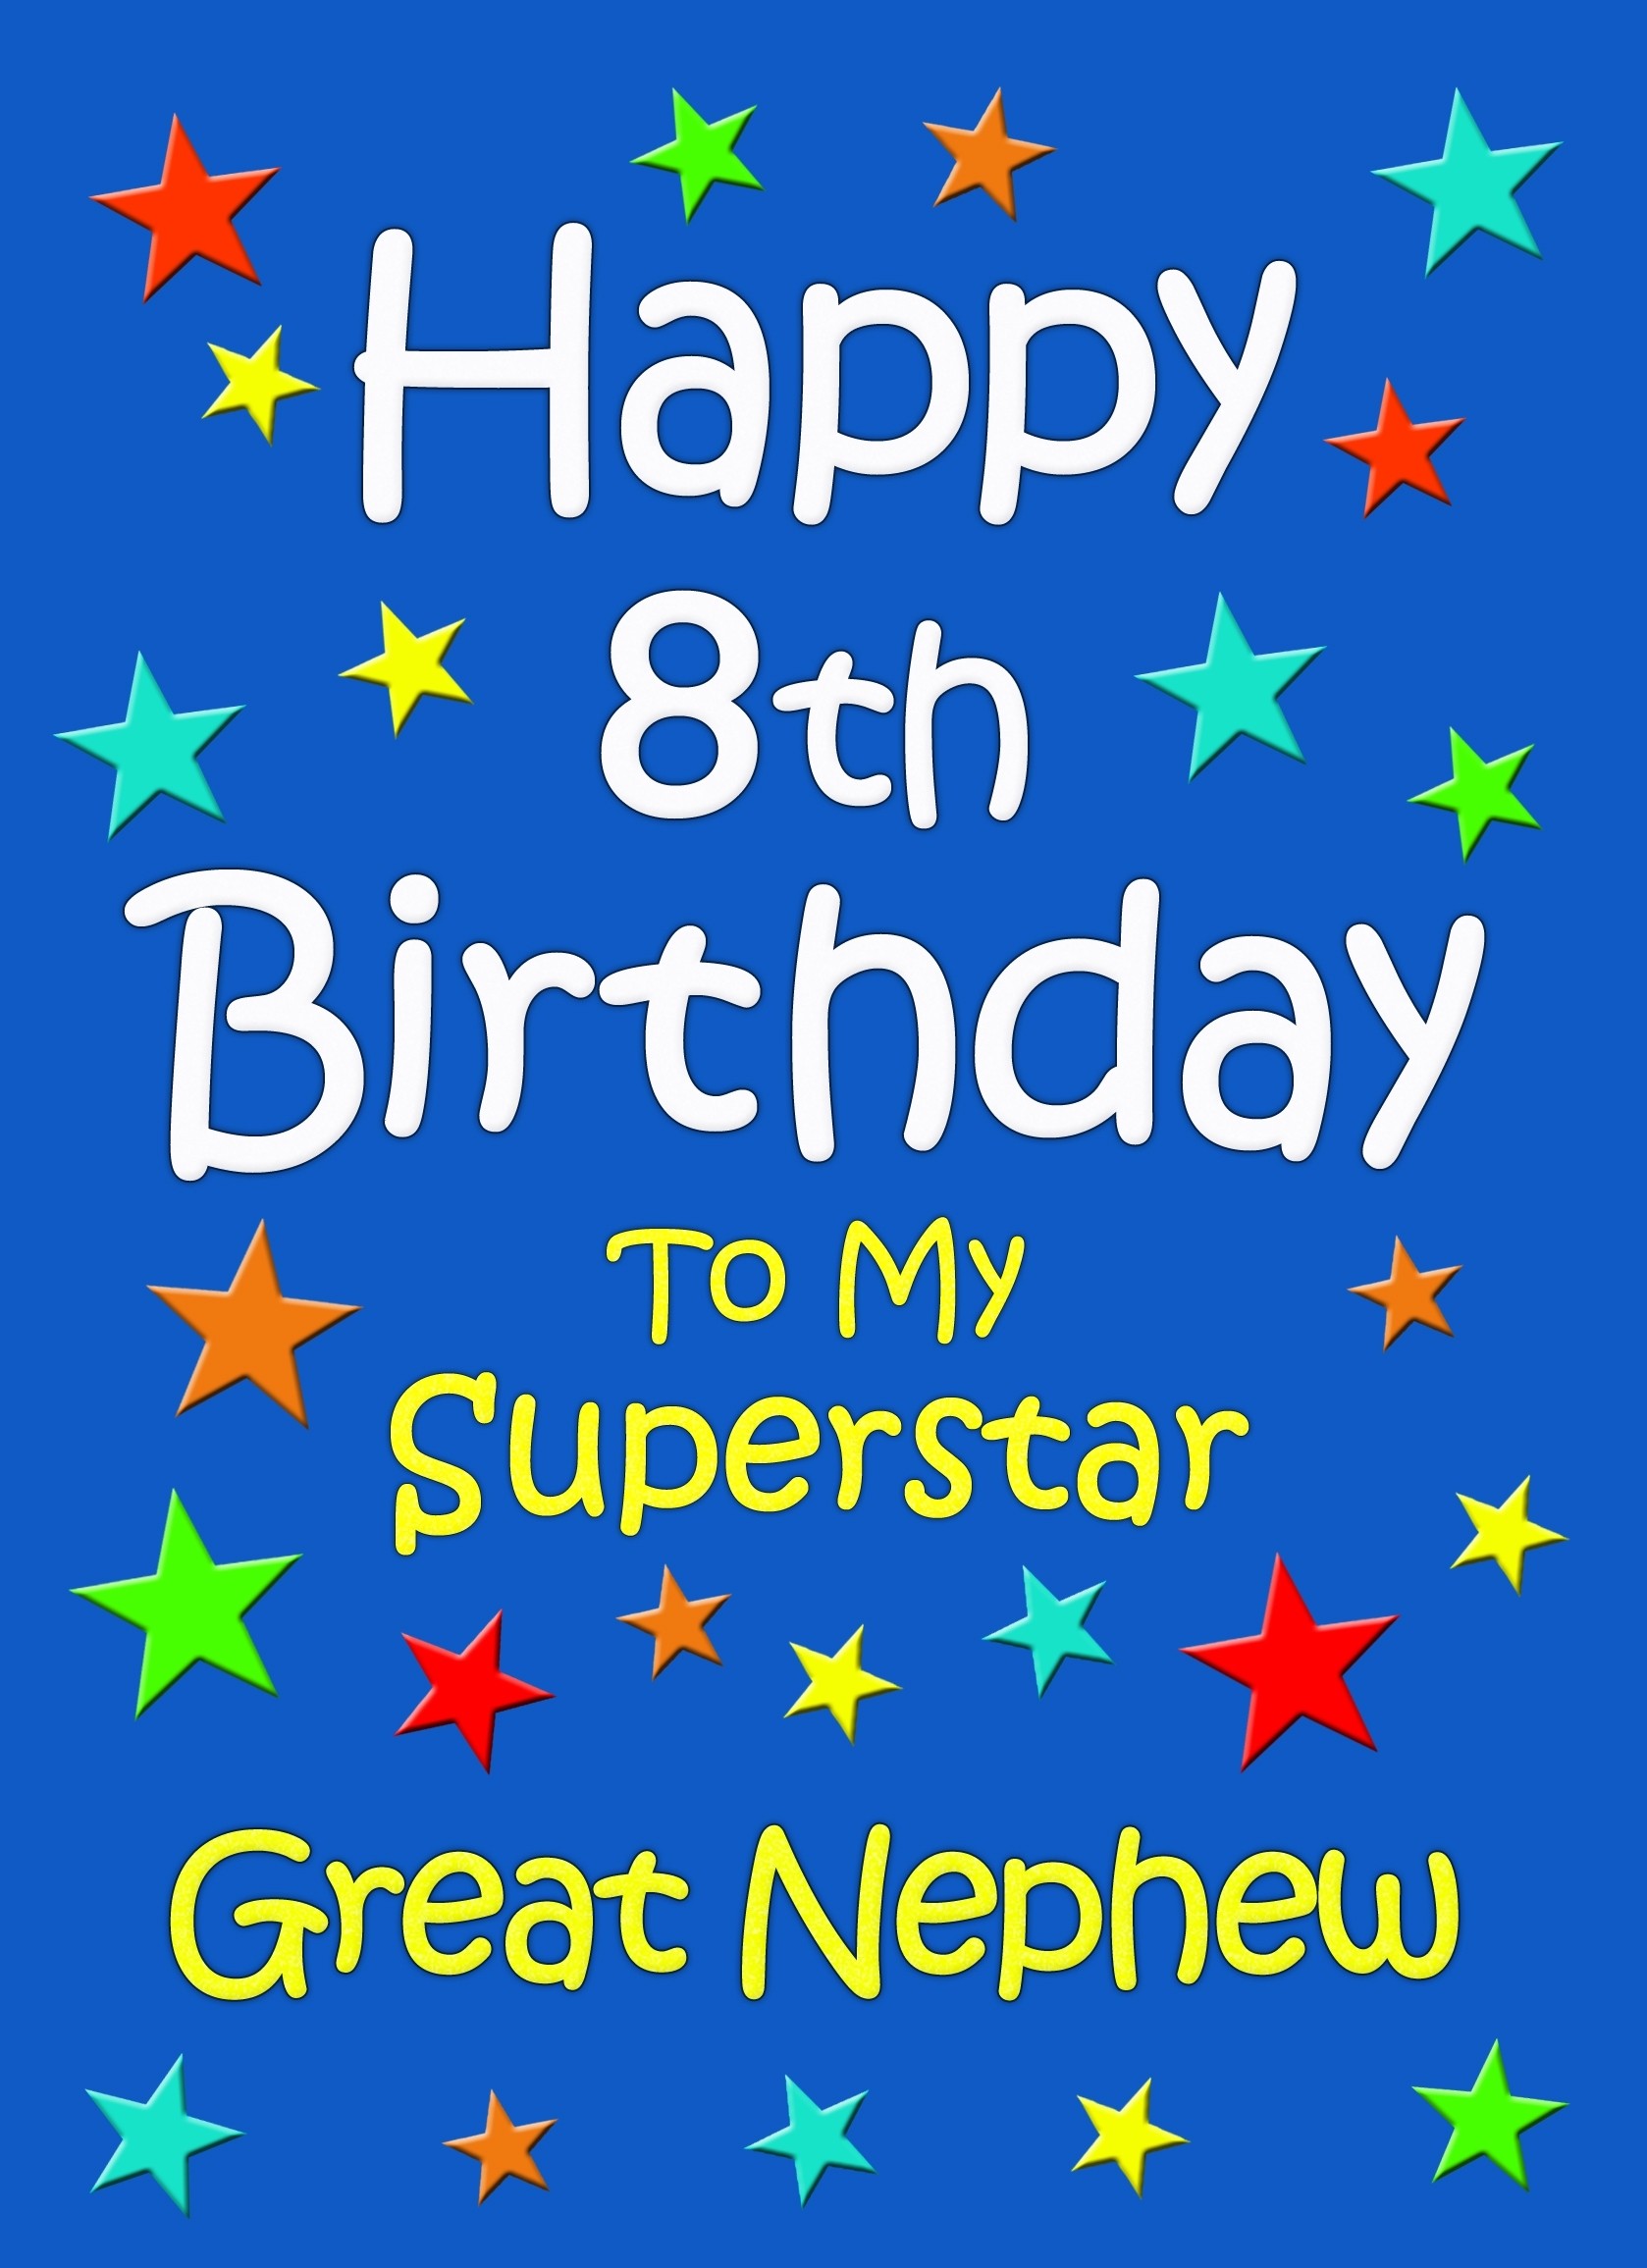 Great Nephew 8th Birthday Card (Blue)